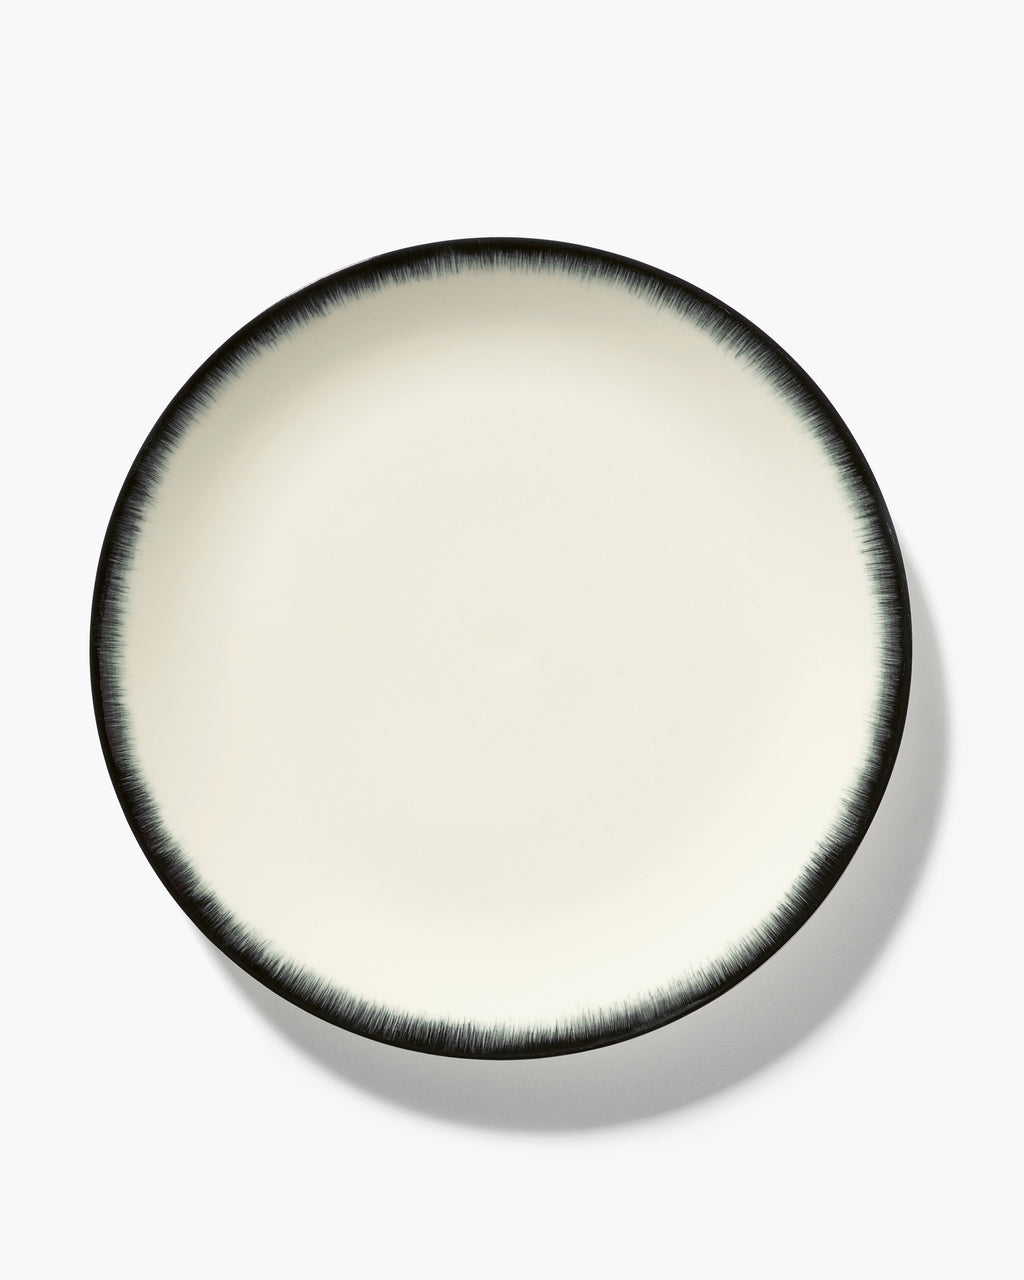 Dinner Plate White/Black Variation 3 De Collection